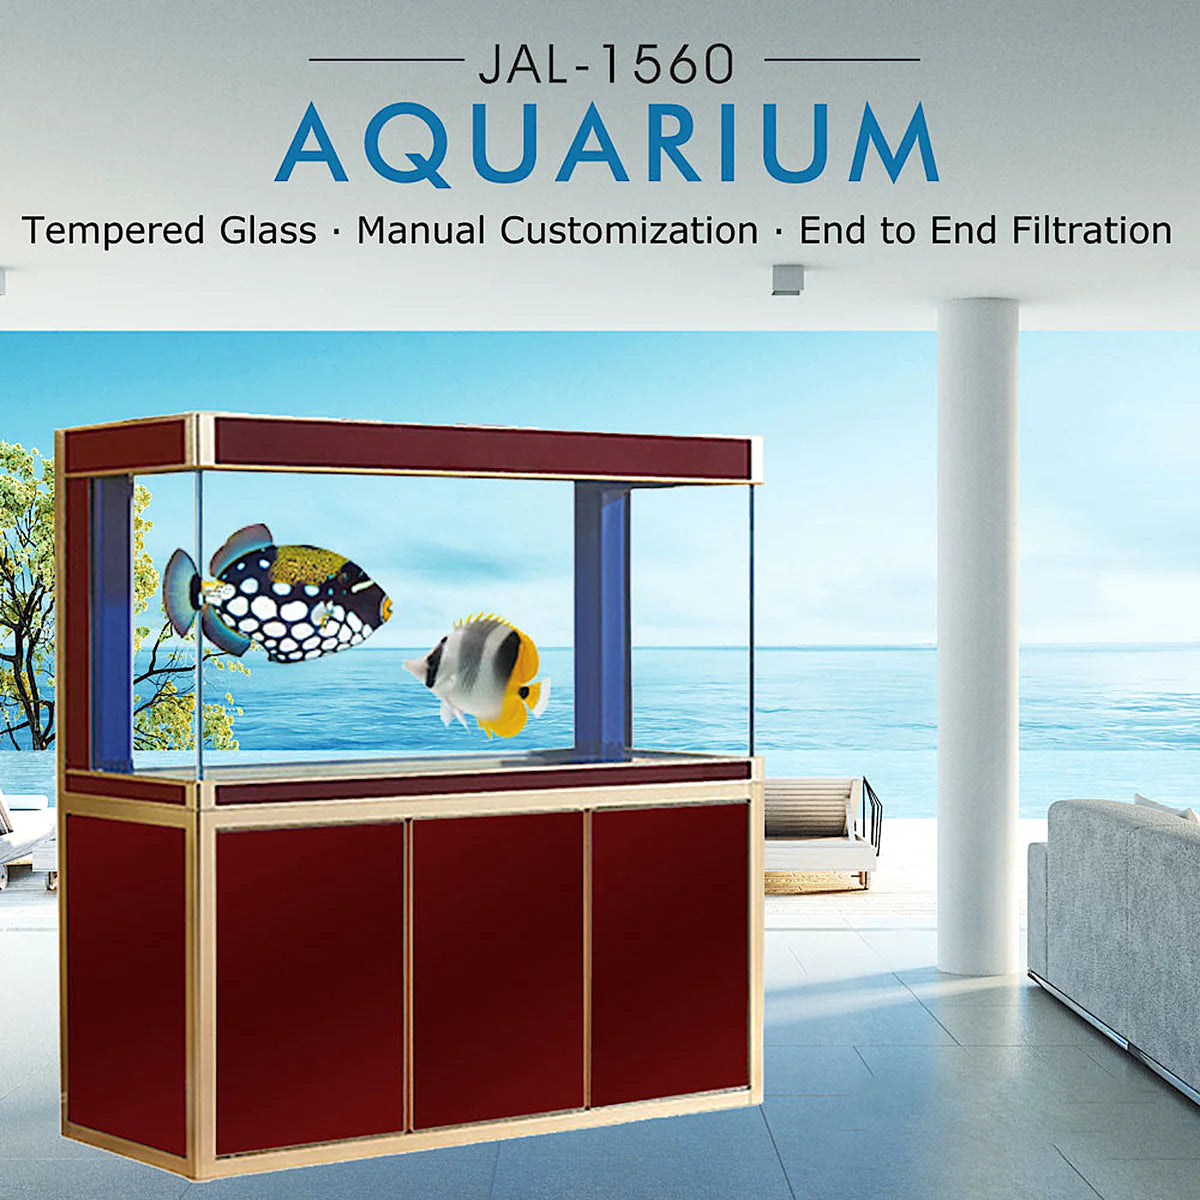 Aqua Dream 175 Gallon Tempered Glass Aquarium Red and Gold AD-1560-RD - Serenity Provision